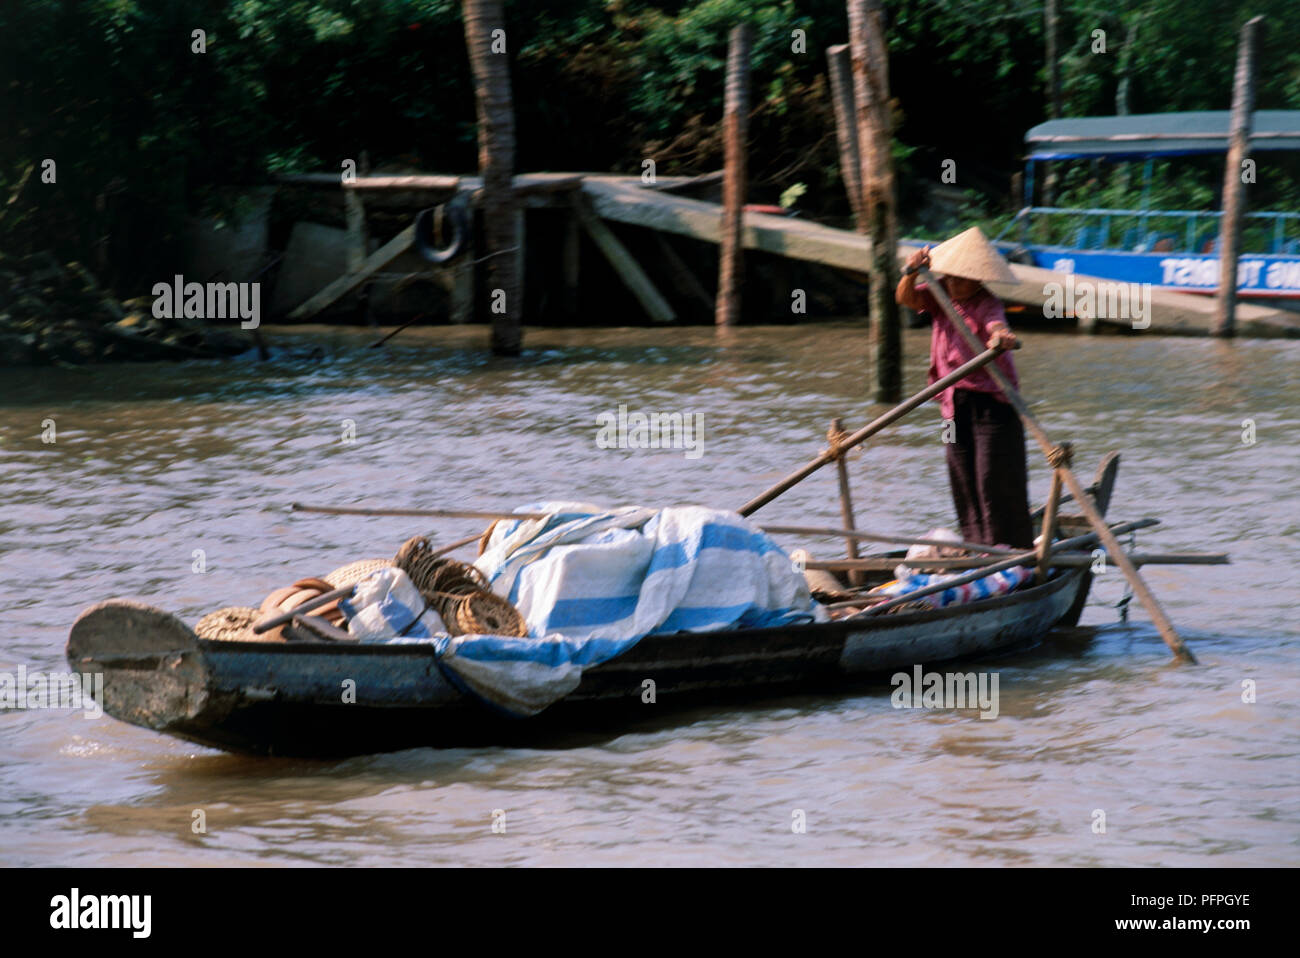 Vietnam, Mekong Delta, woman rowing sampan boat on river with long oars Stock Photo